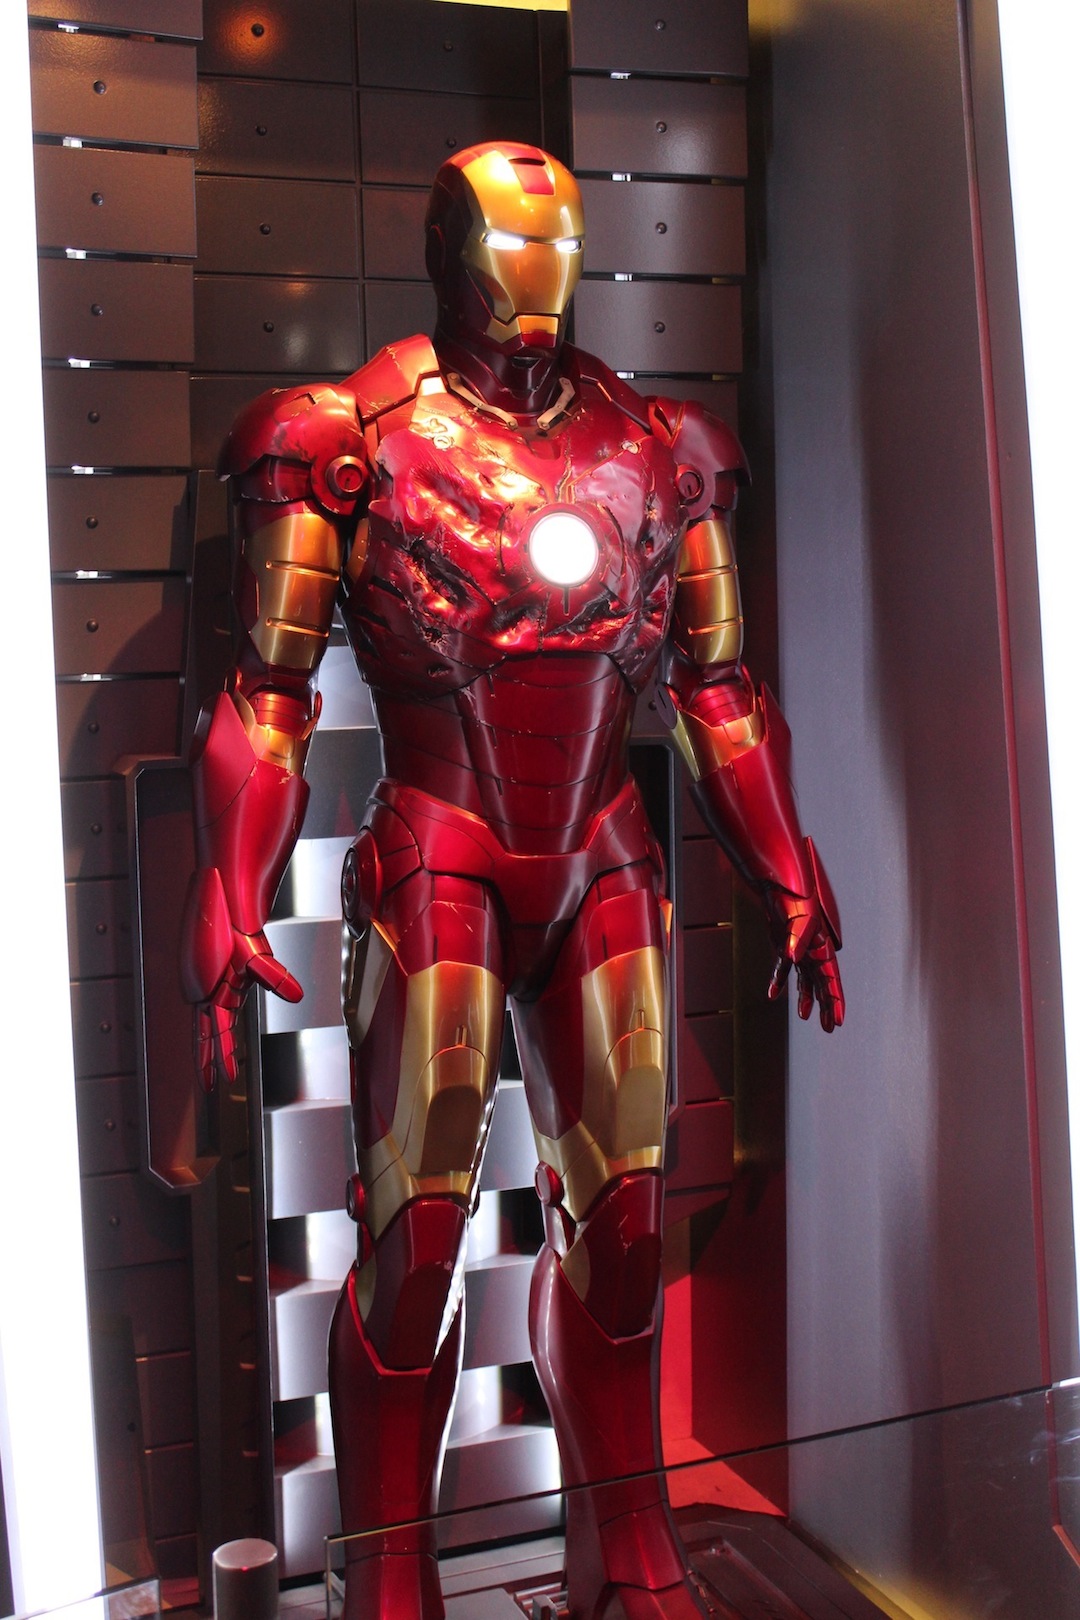 "Iron Man Tech Presented By Stark Industries"